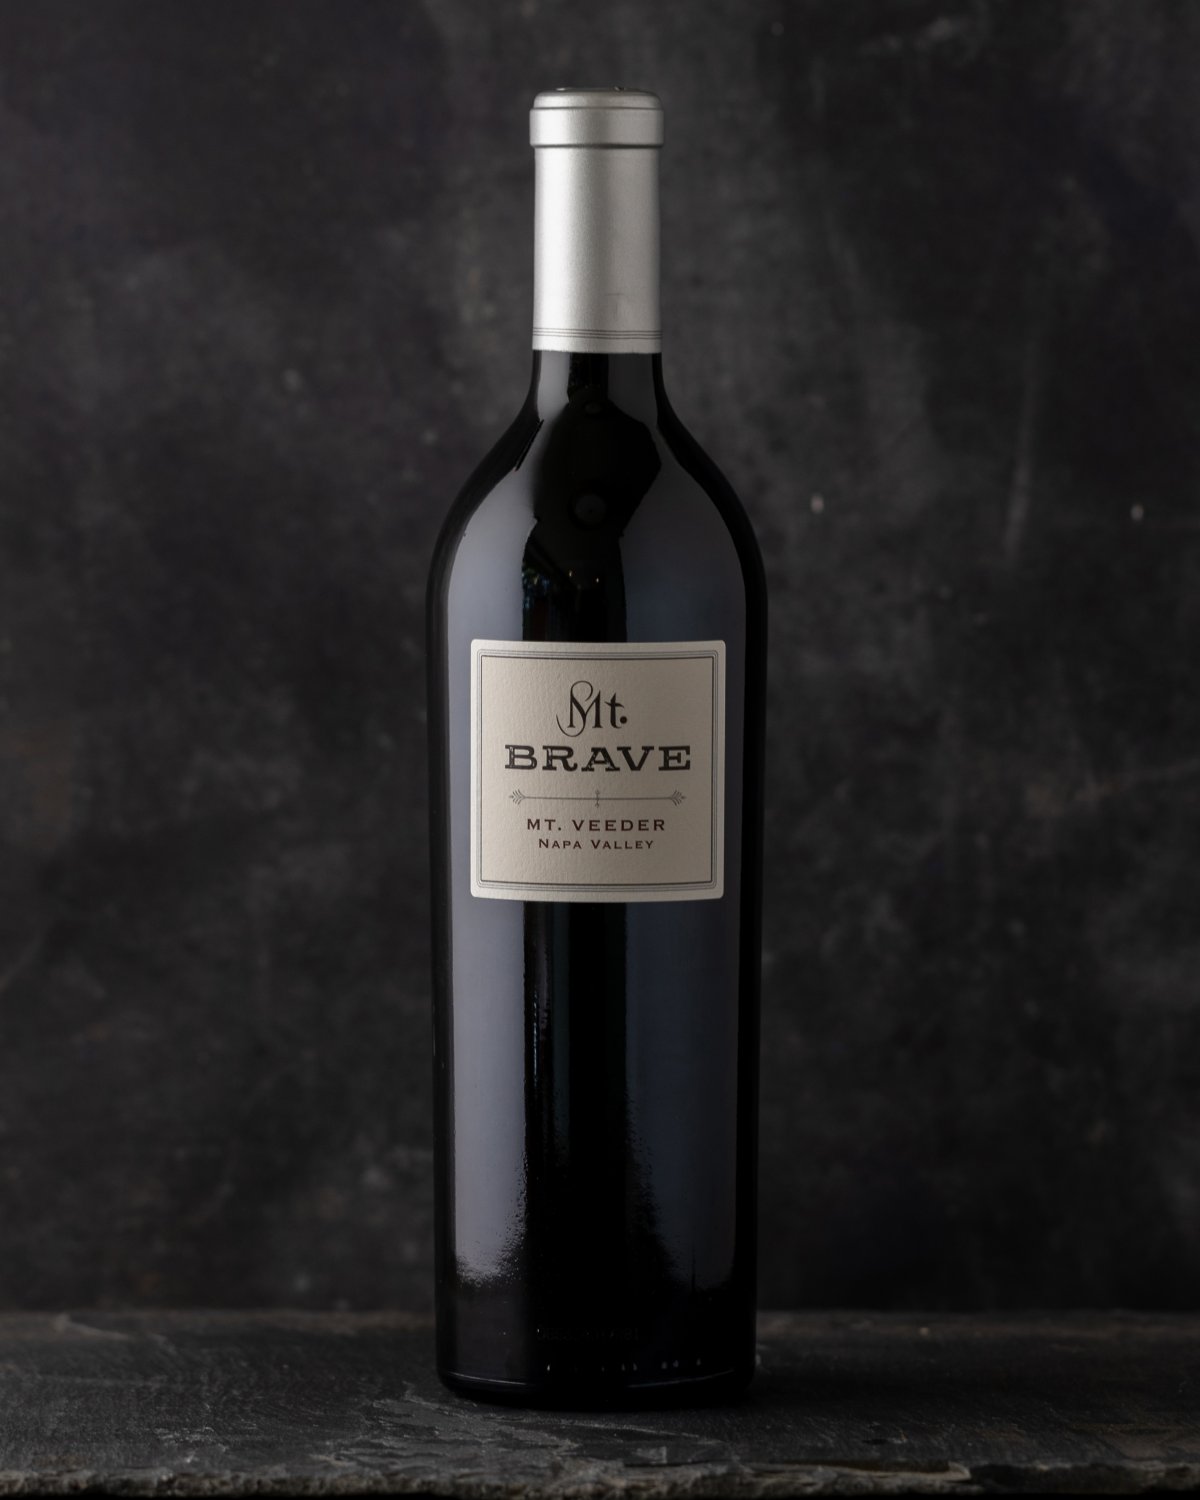 Mt. Brave Bottle of wine against a dark background